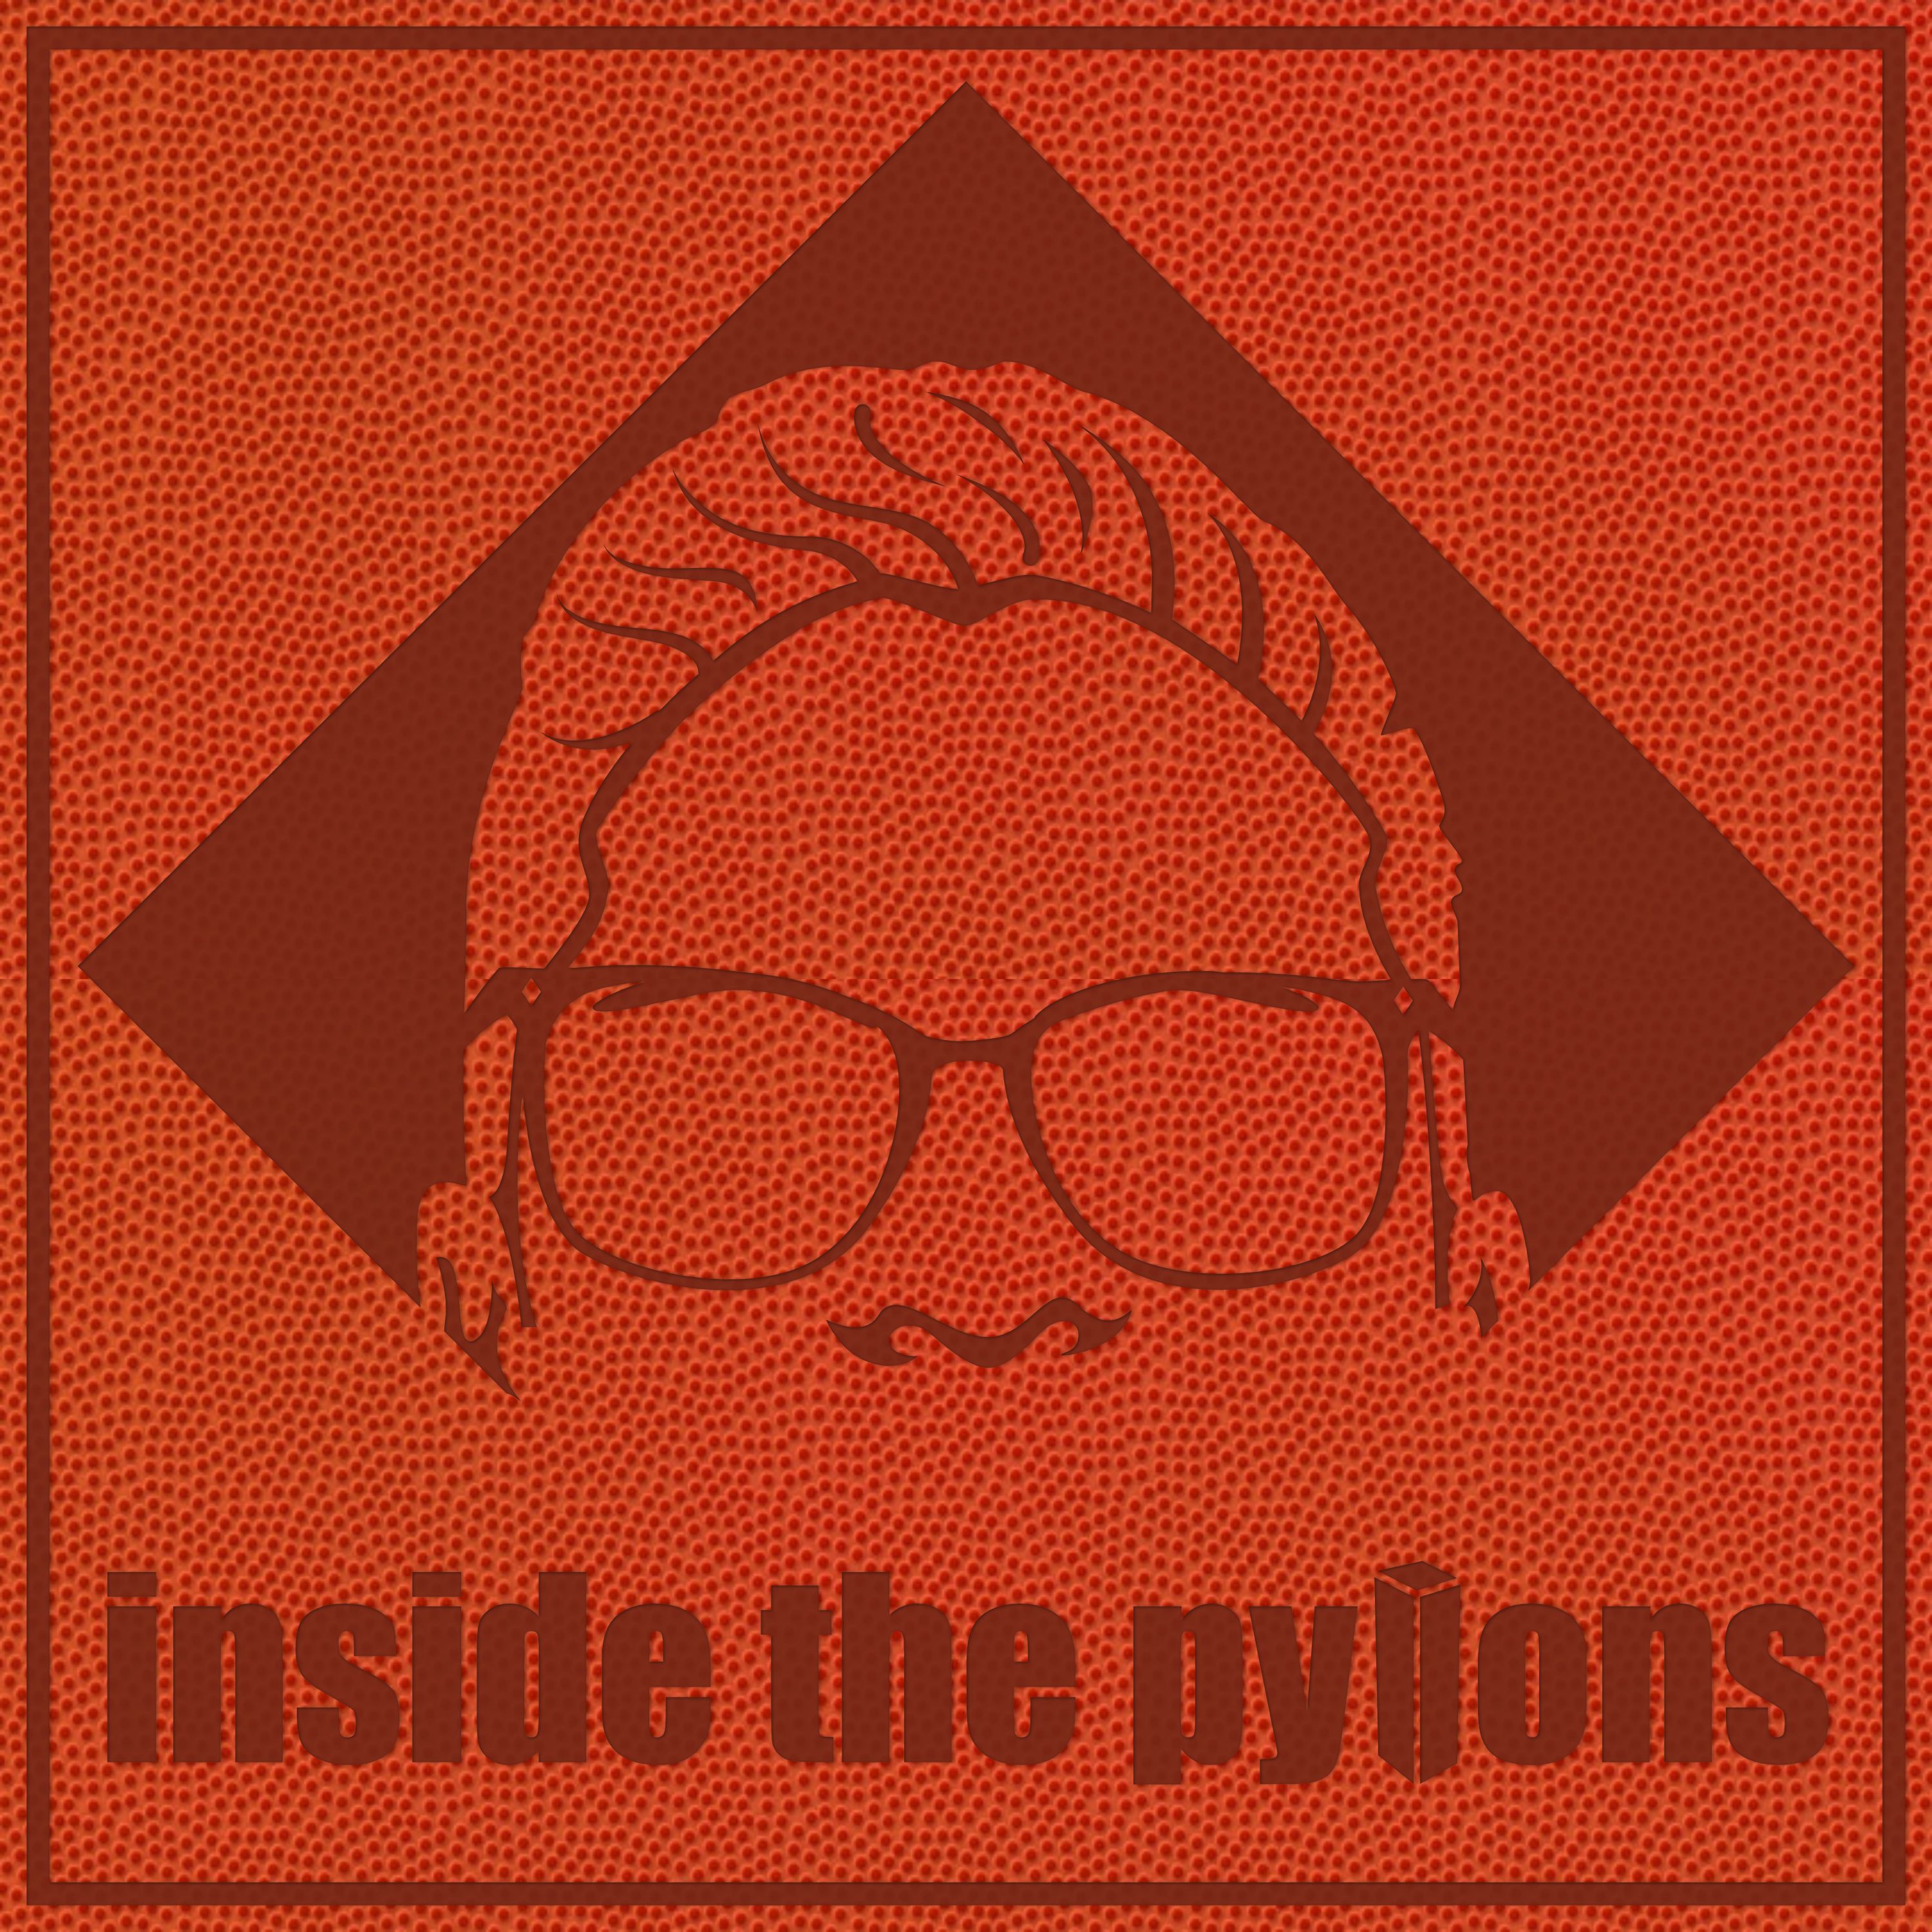 Inside the Pylons